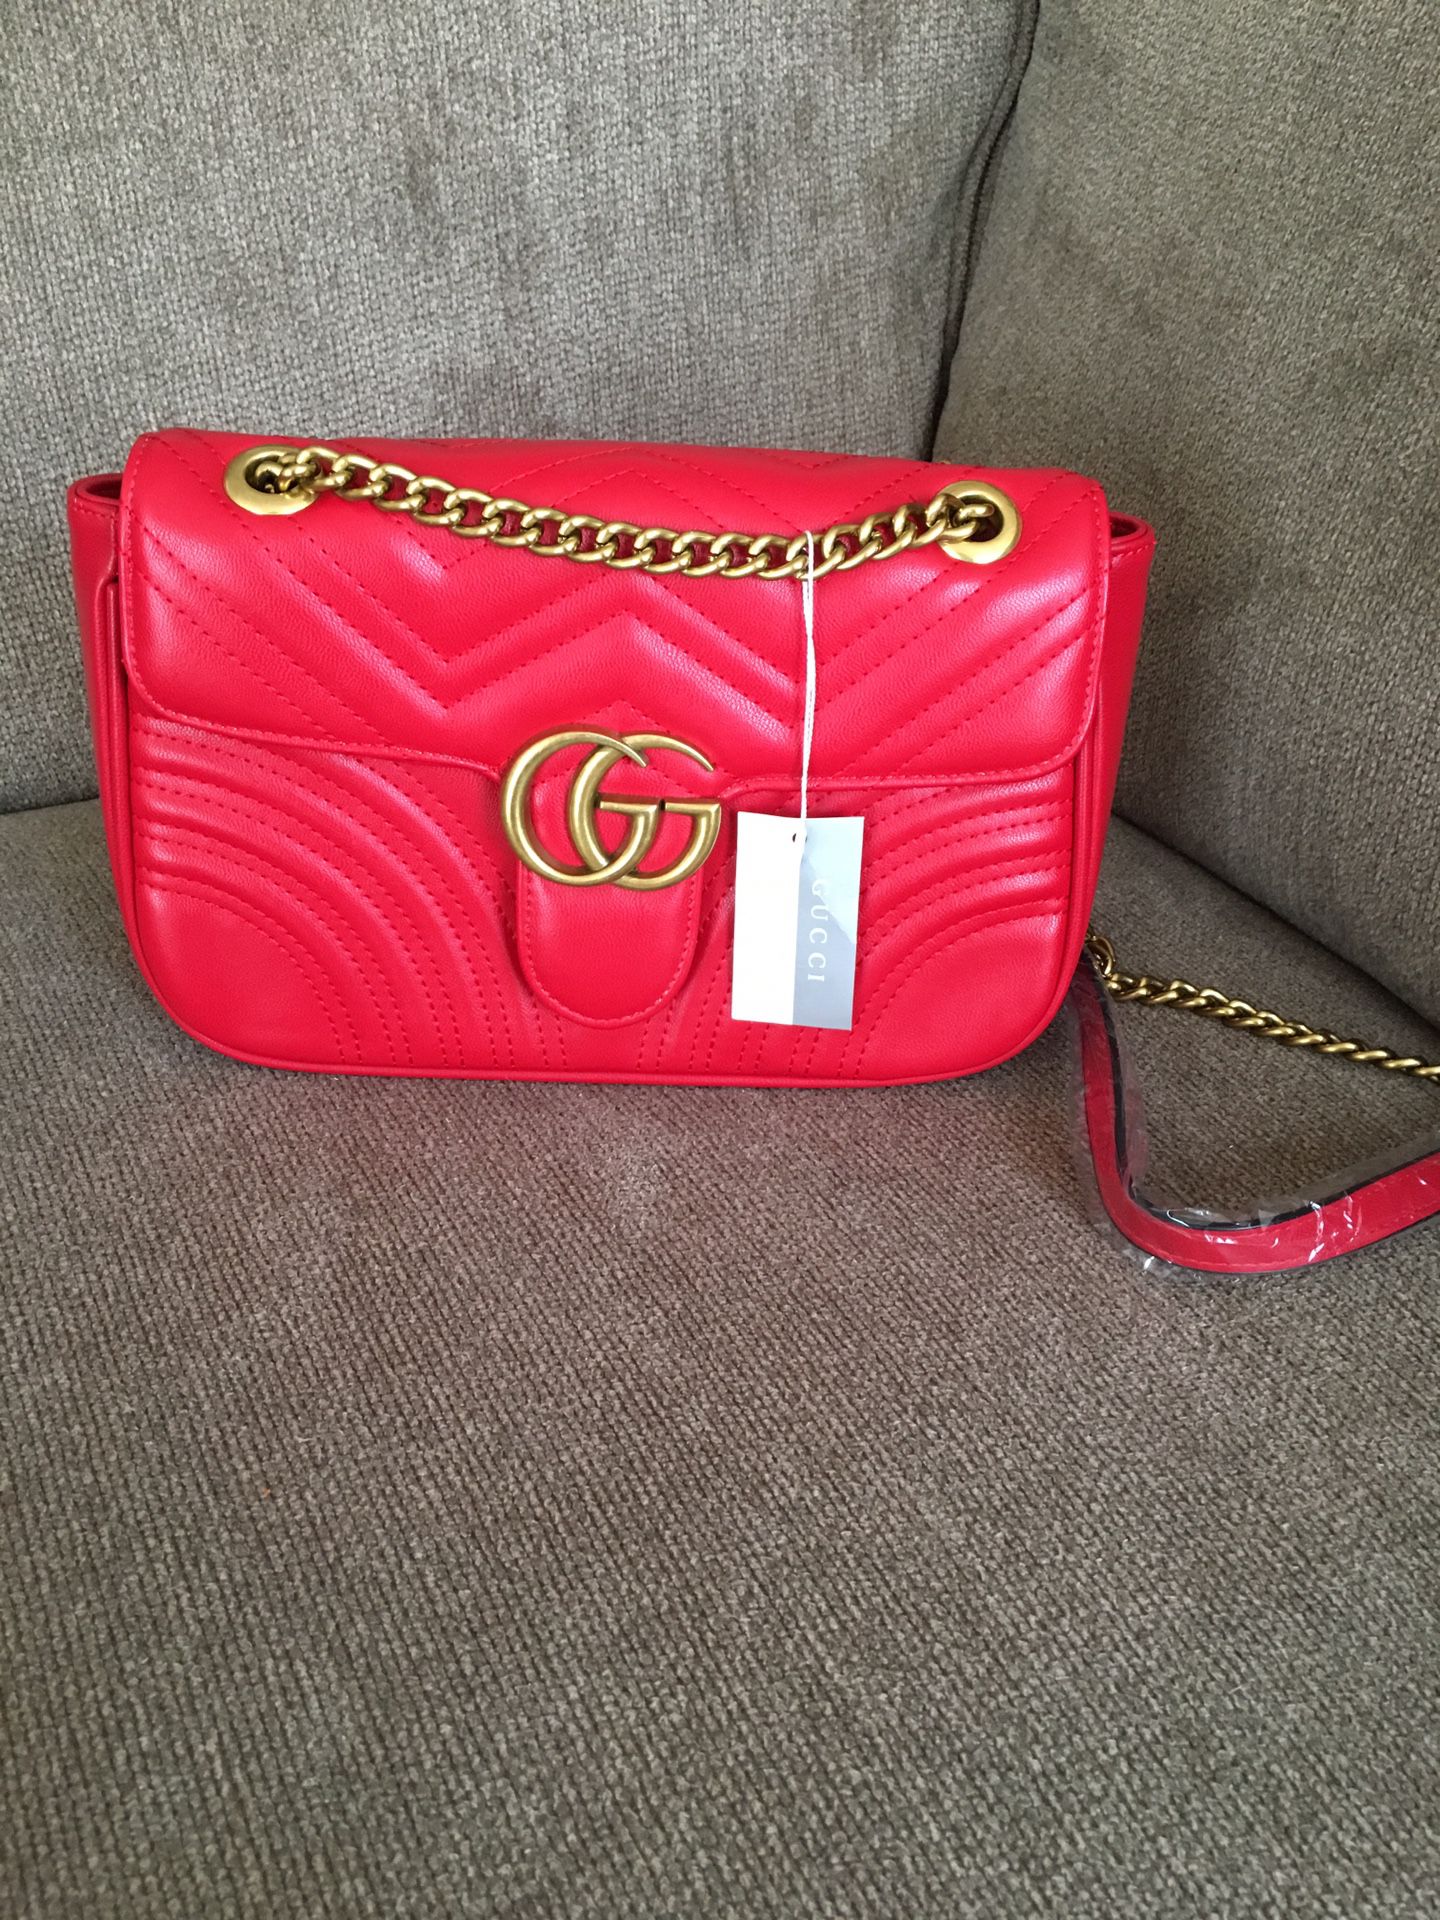 Nice luxury red purse new!